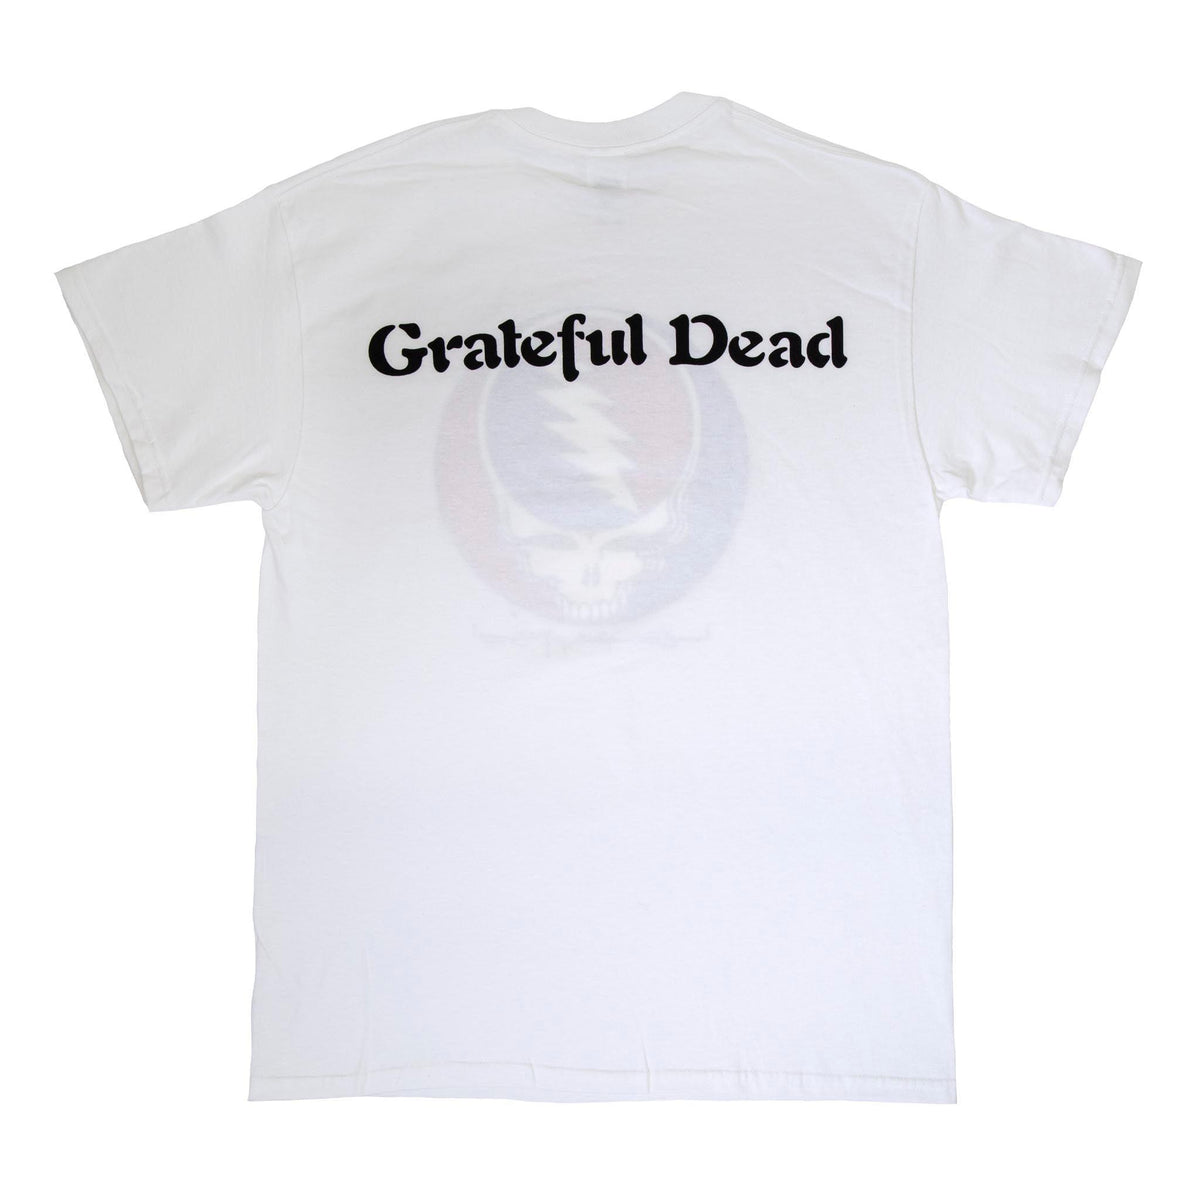 Steal Your Face - Hand Made - Grateful Dead T shirt. – Grateful